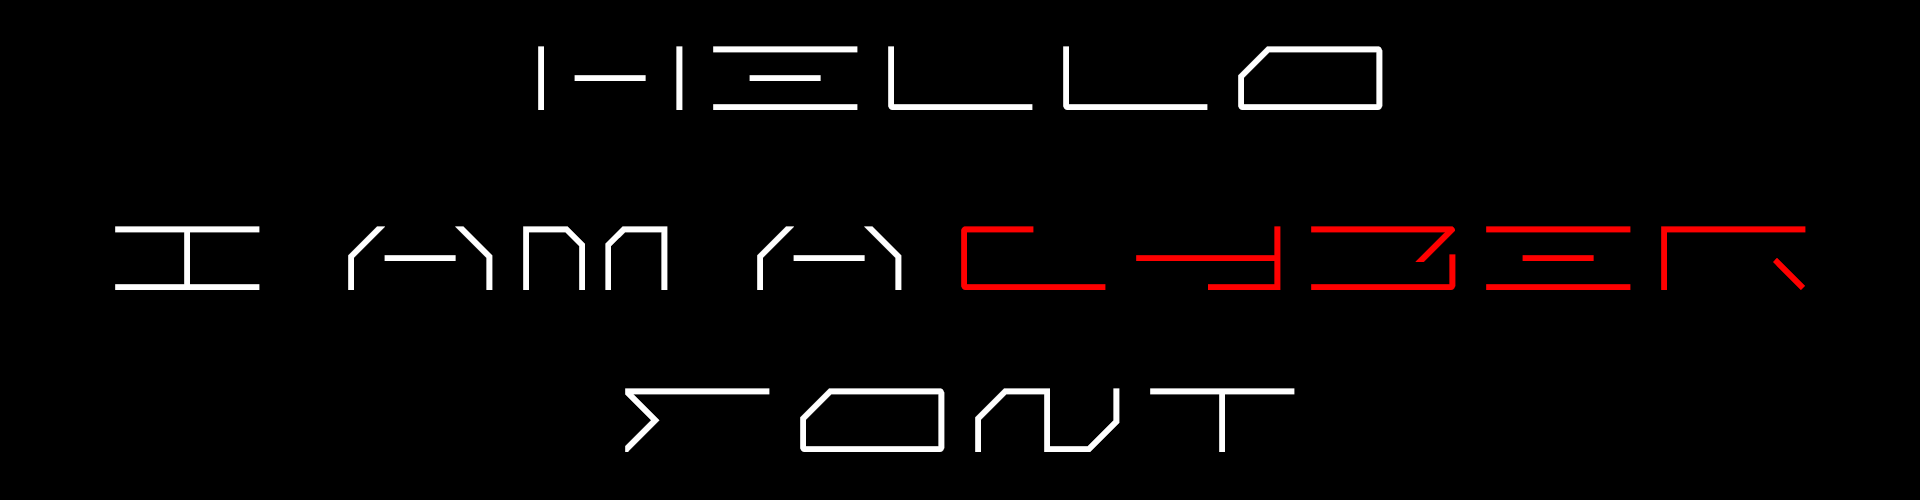 Tesla Cybertruck Insane Technology Bandwagon - The Font! hello